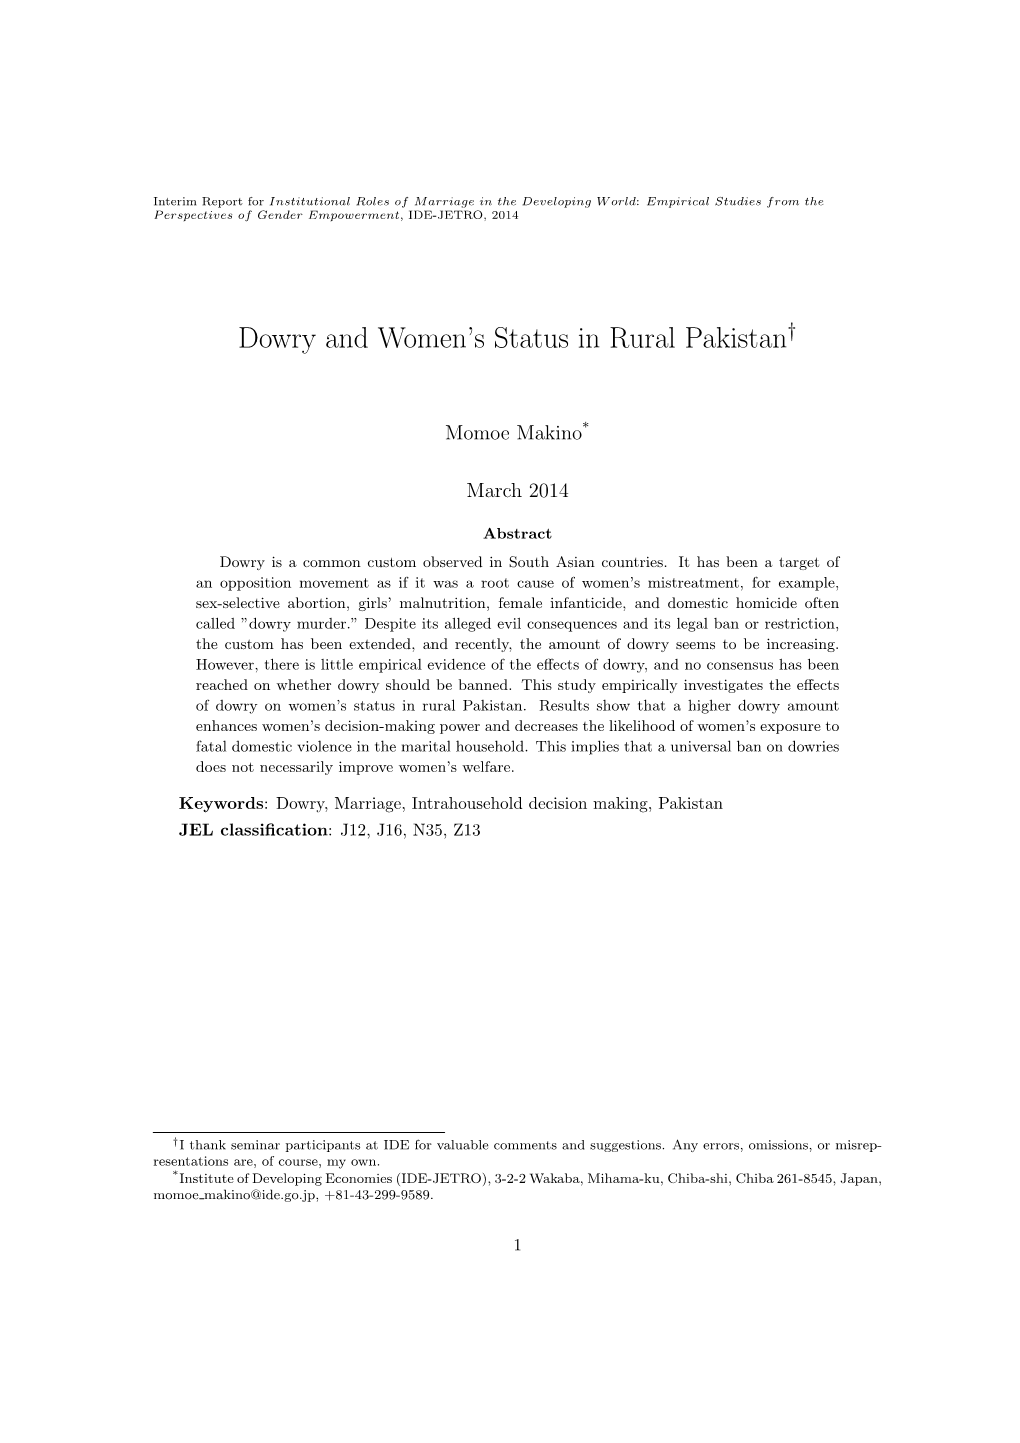 Dowry and Women's Status in Rural Pakistan